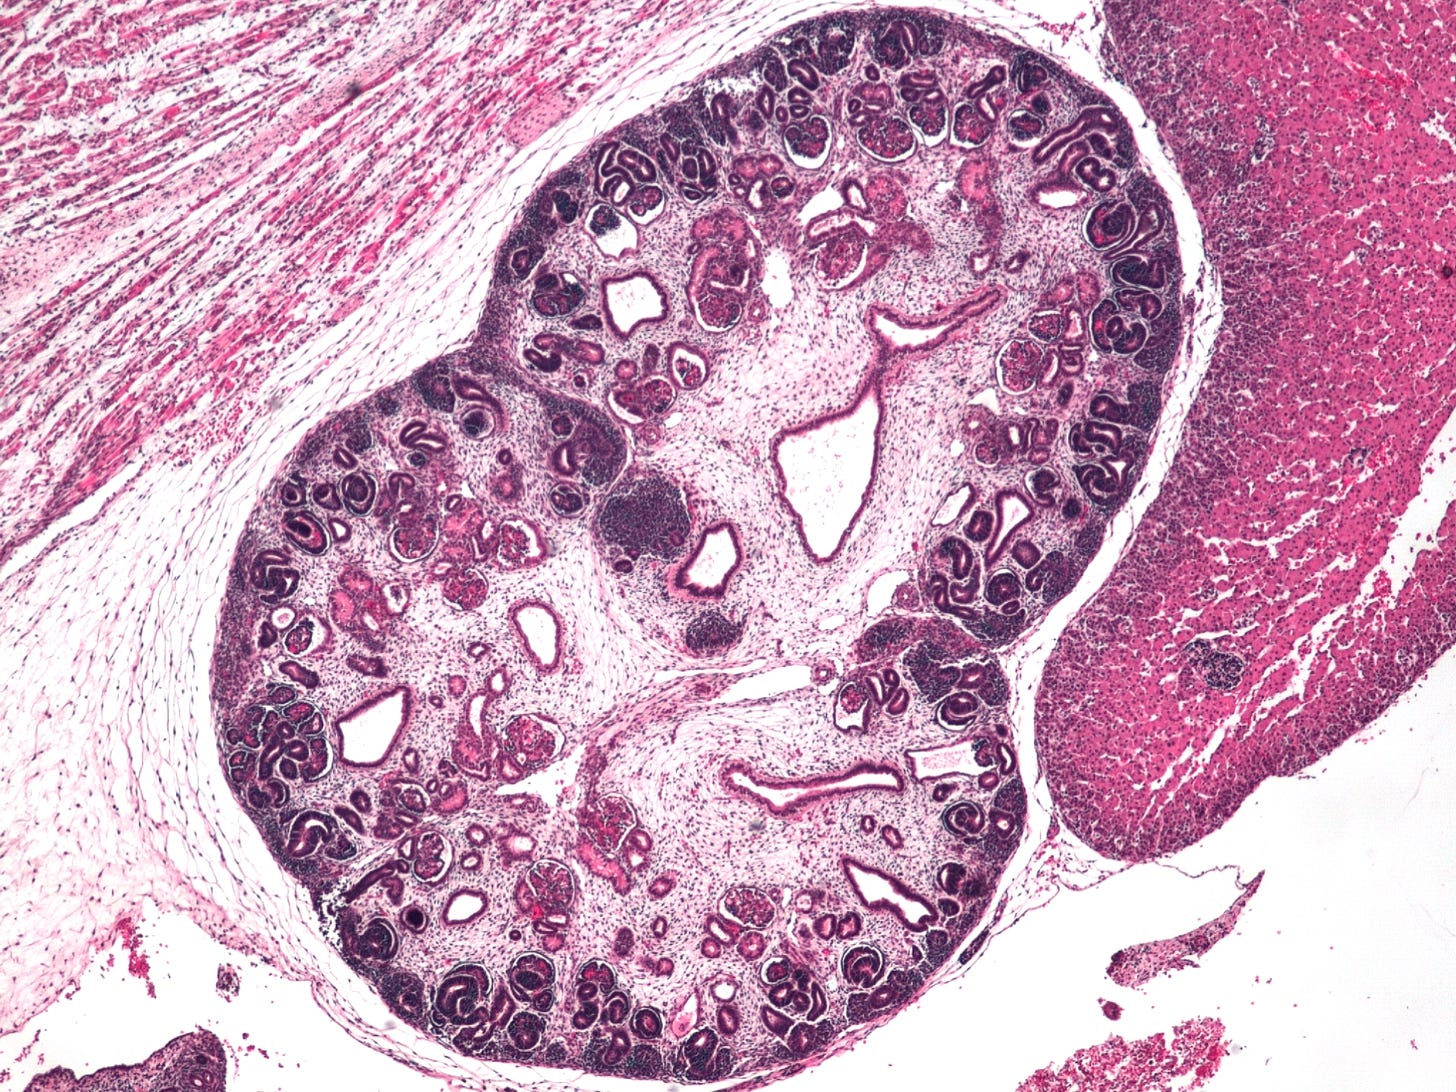 File:Human embryo kidney.jpg - Wikimedia Commons